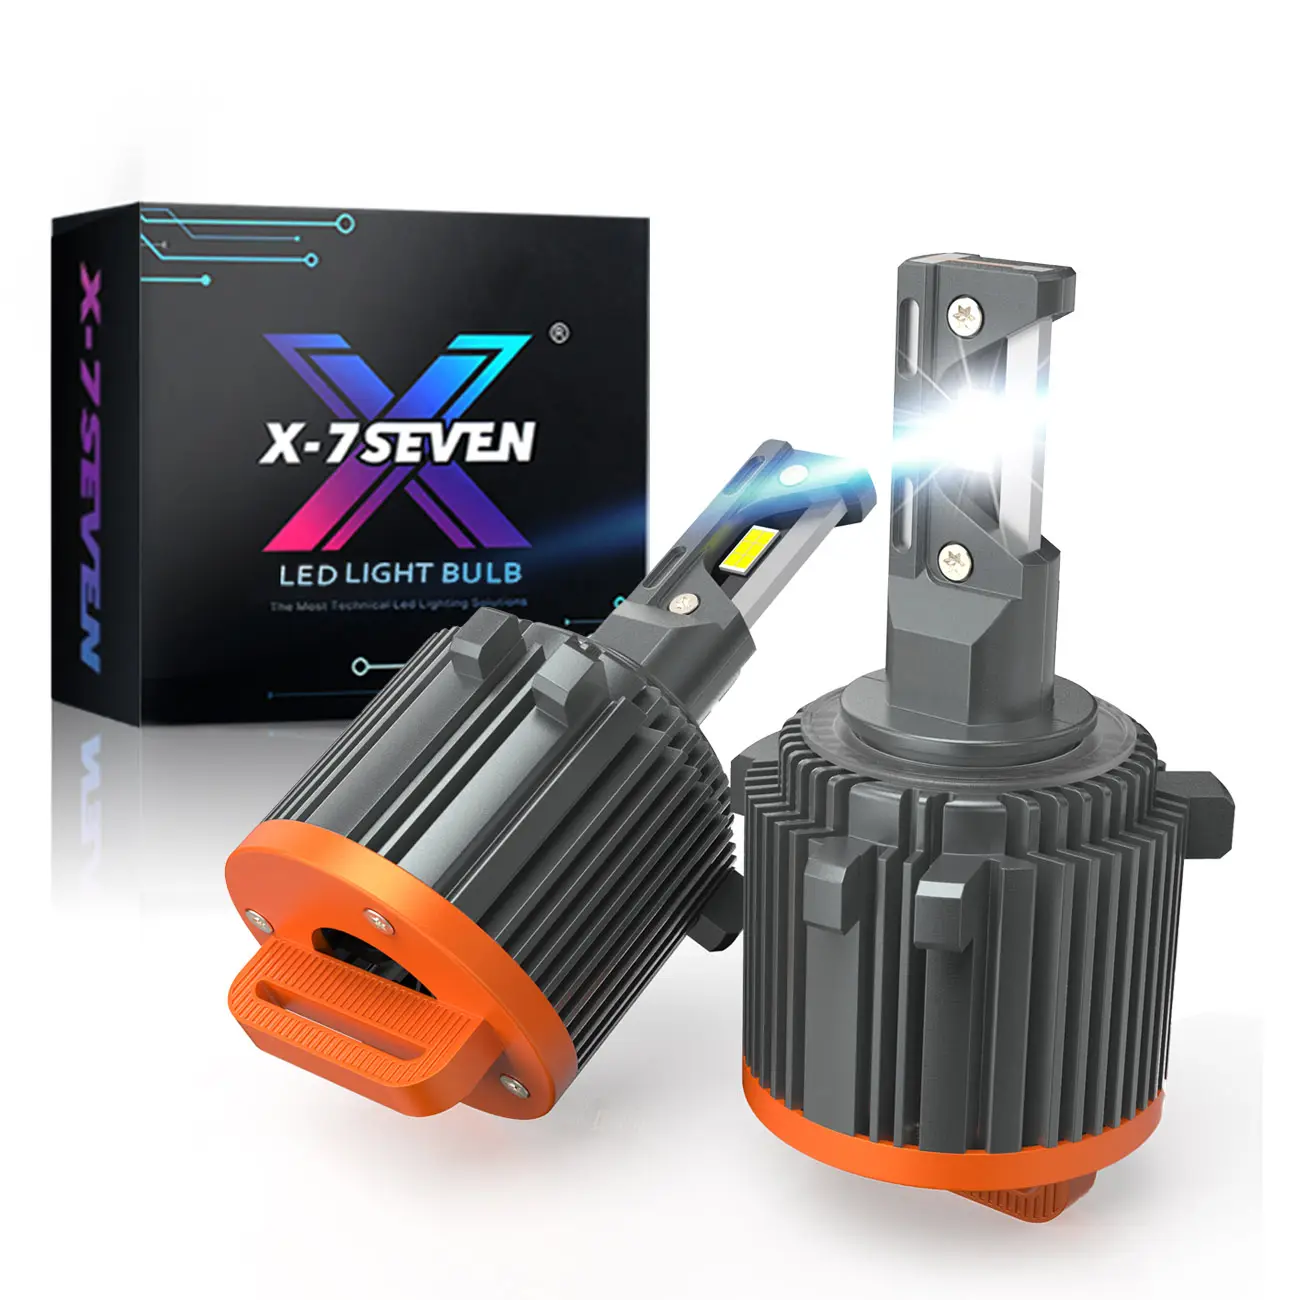 X-7SEVEN Factory Sell XMAXGH7 LED Headlight Bulb MK7 MK6 H15 Car Accessories For Golf 7